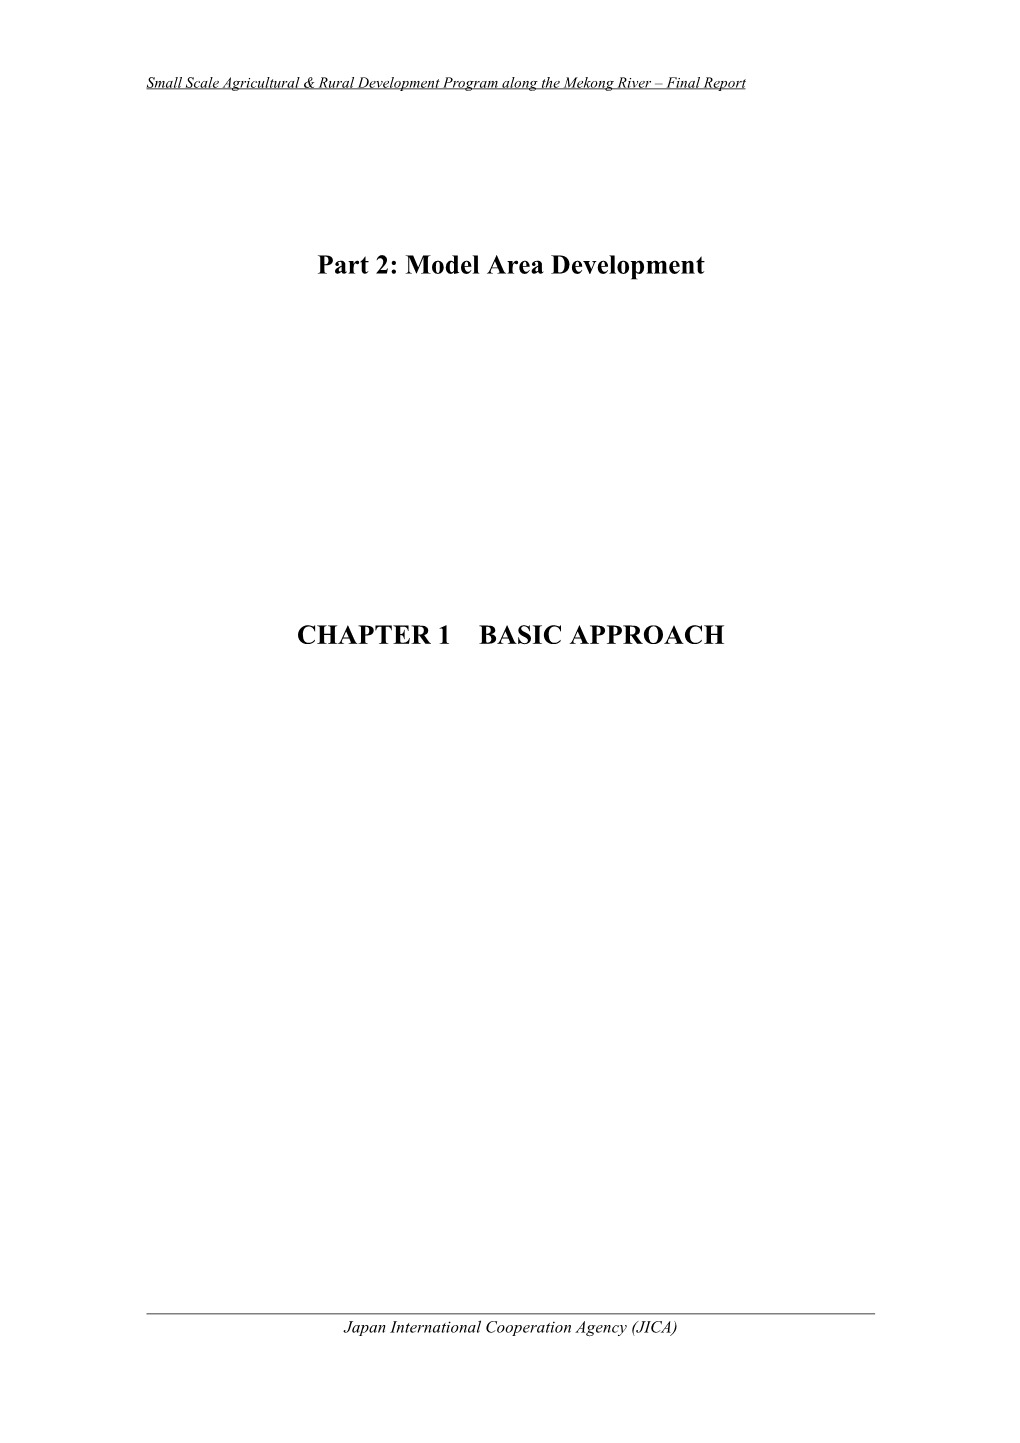 Part 2: Model Area Development CHAPTER 1 BASIC APPROACH